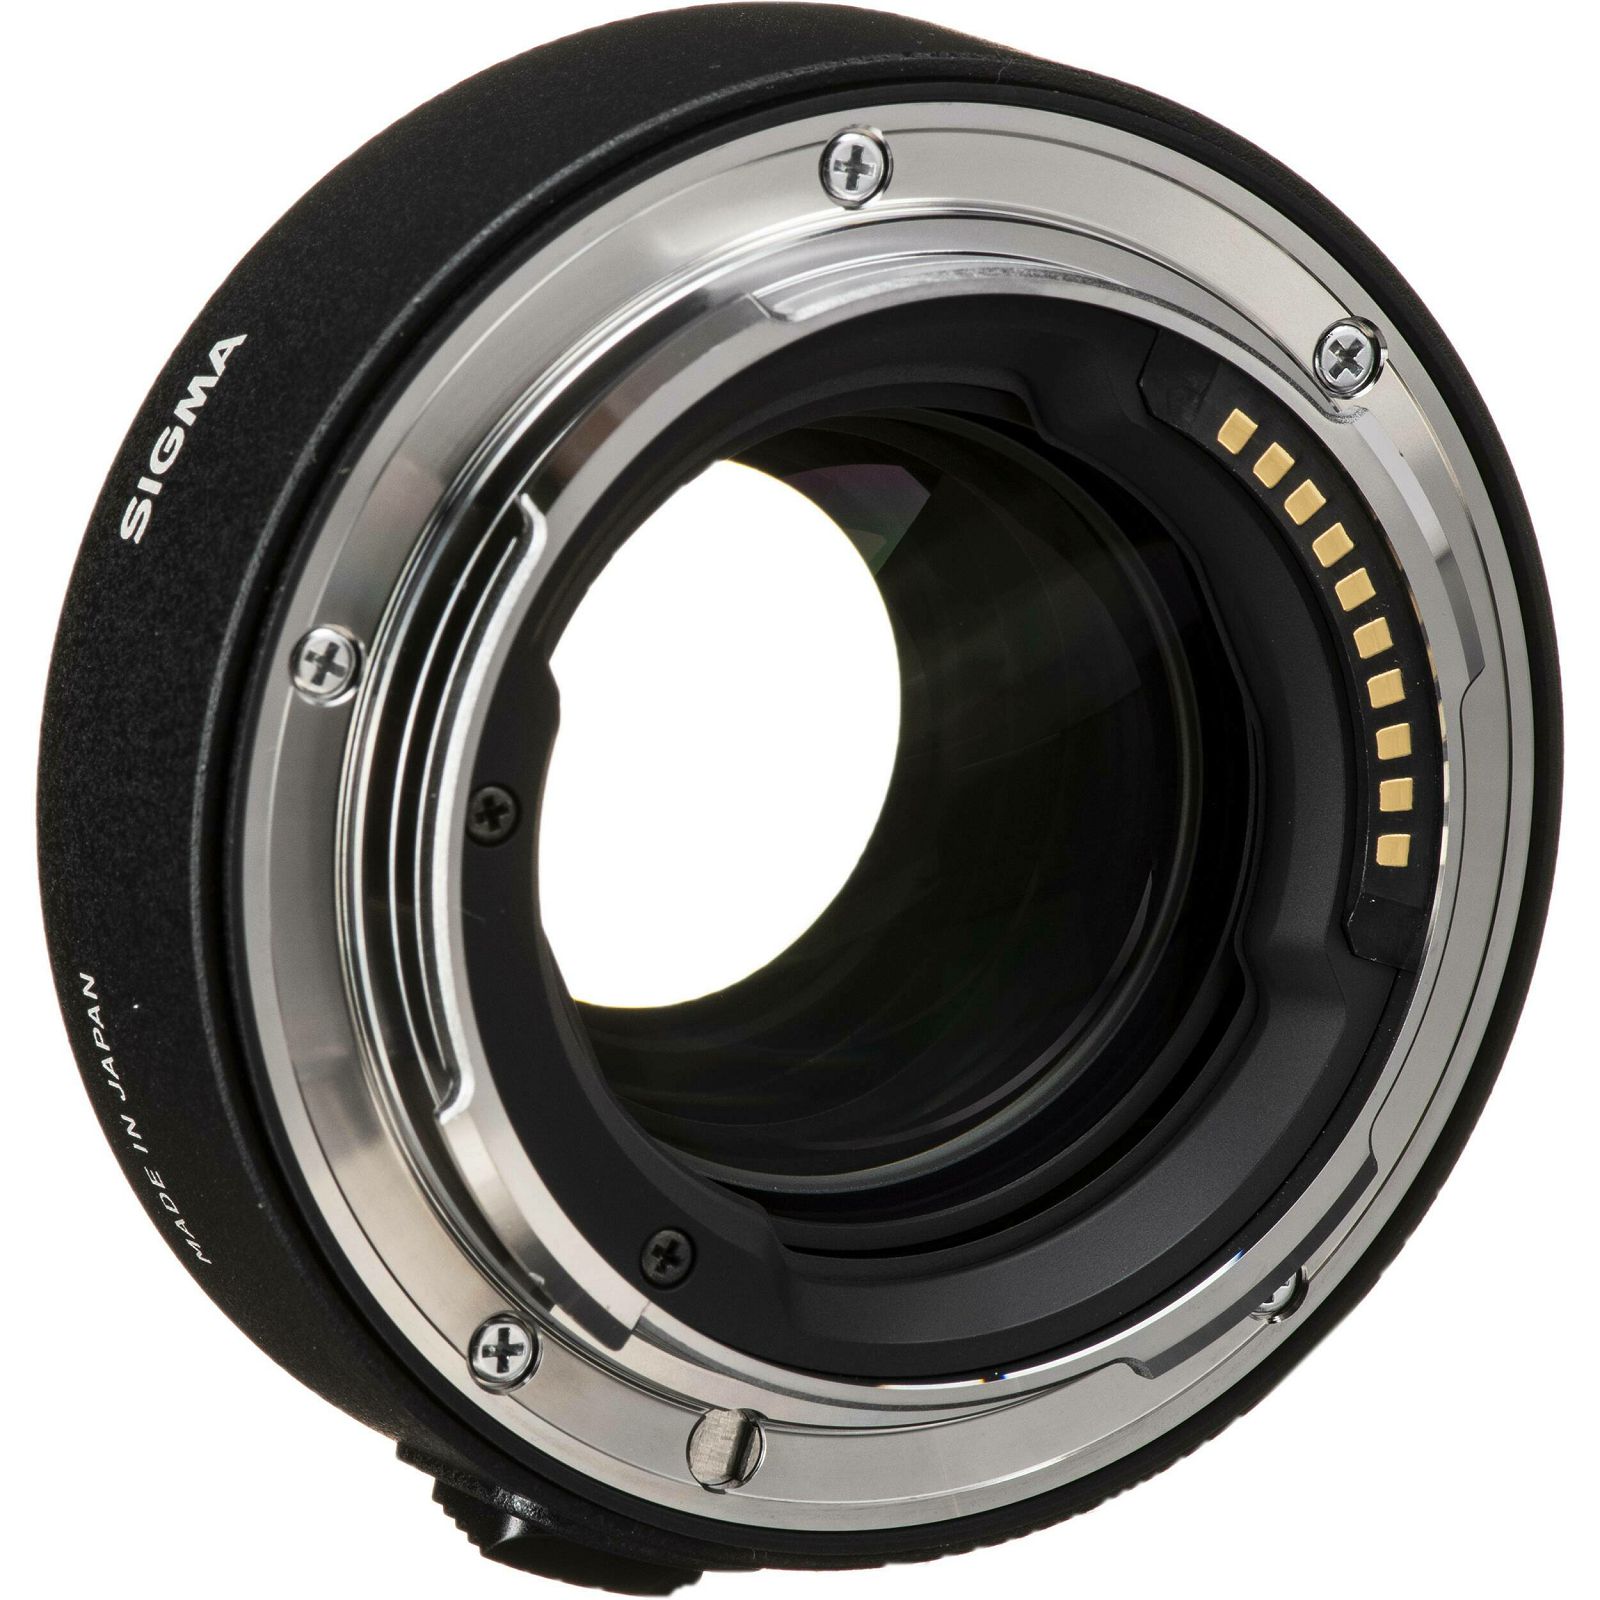 Sigma TC-1411 1.4x Telekonverter za Panasonic Leica L-mount